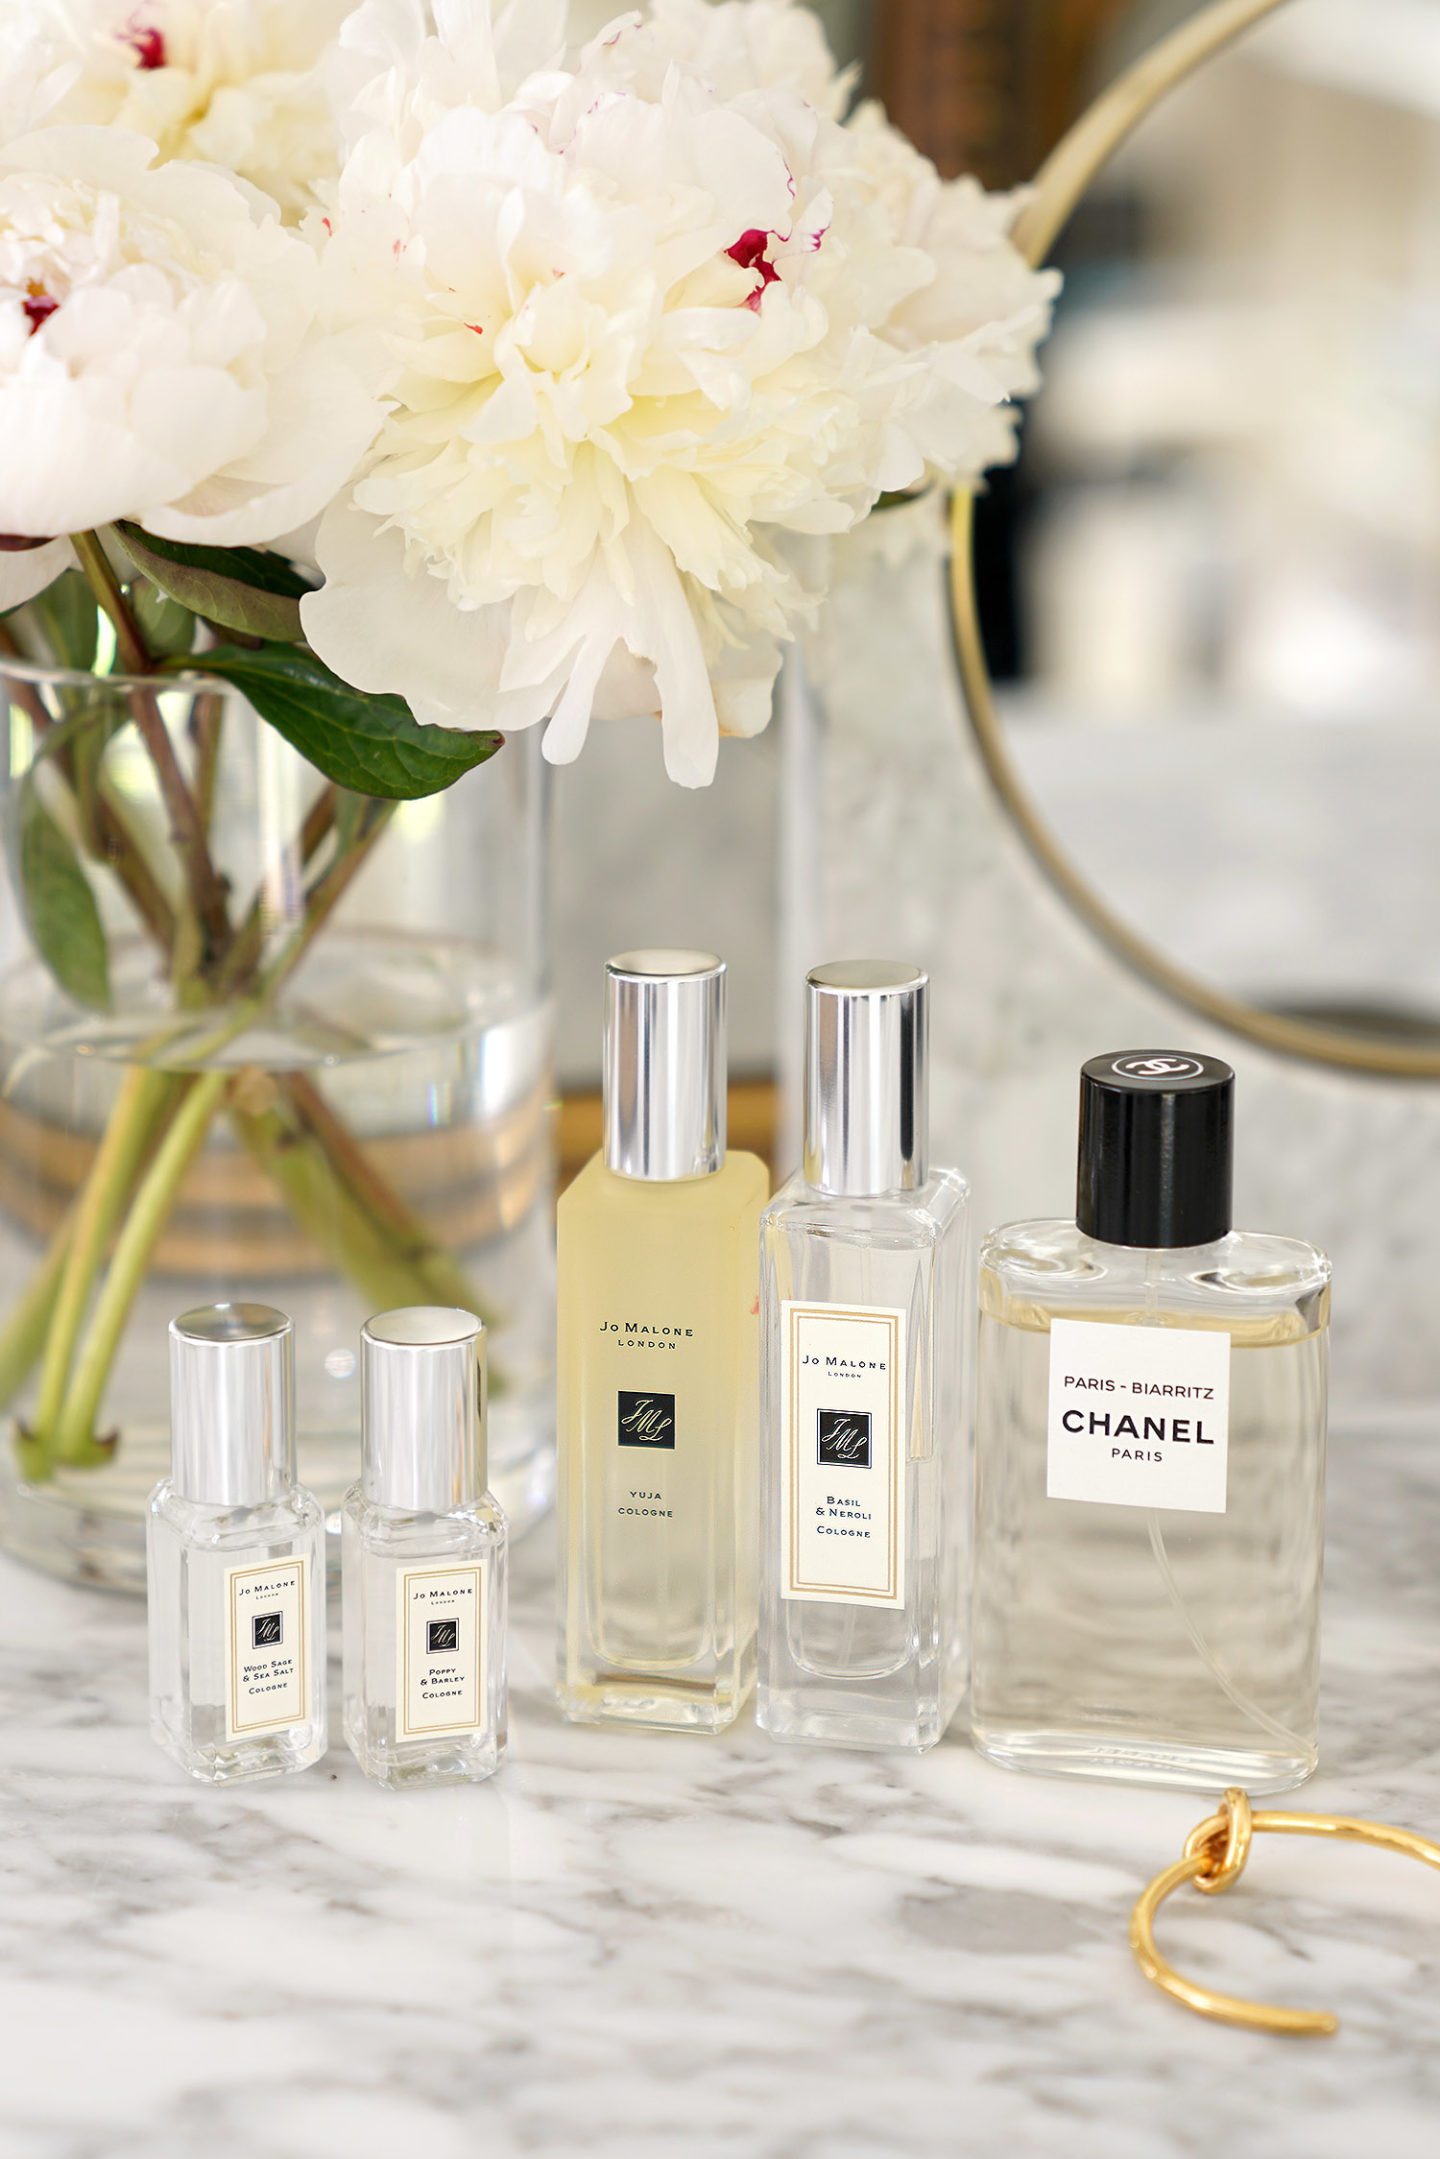 Favorite Citrus Perfumes Jo Malone Yuja, Basil Neroli, Chanel Paris-Biarritz